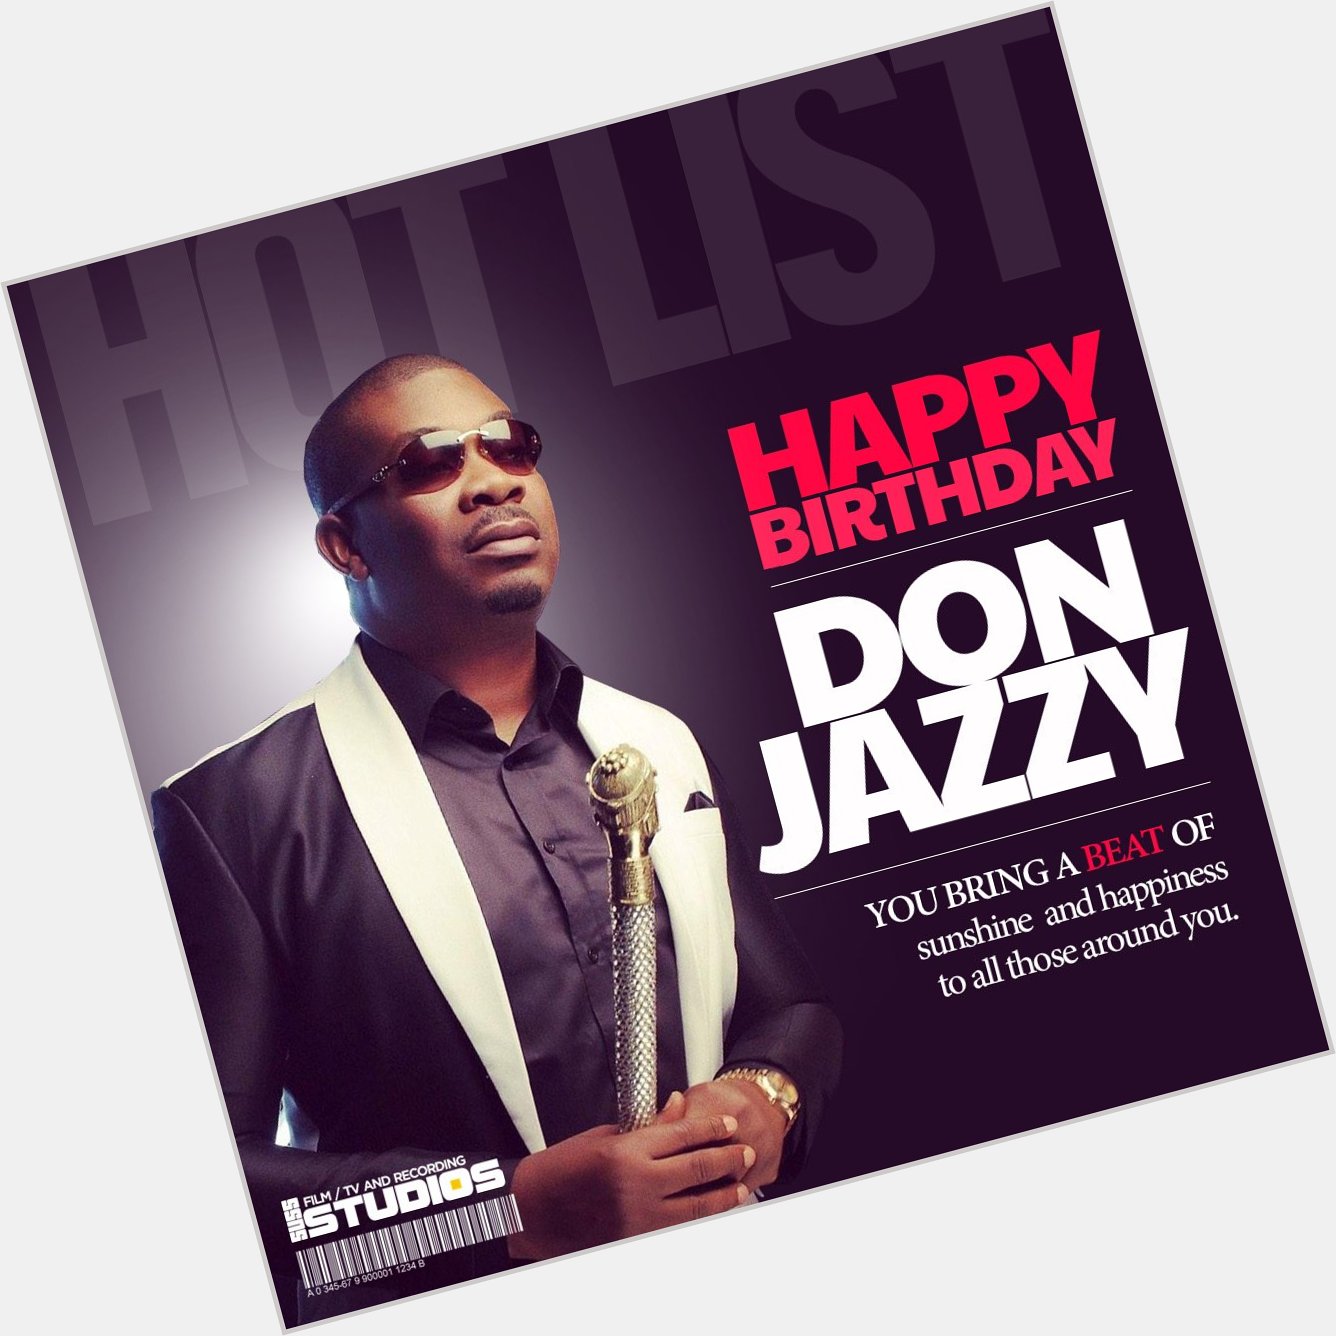 Happy birthday Don Jazzy 